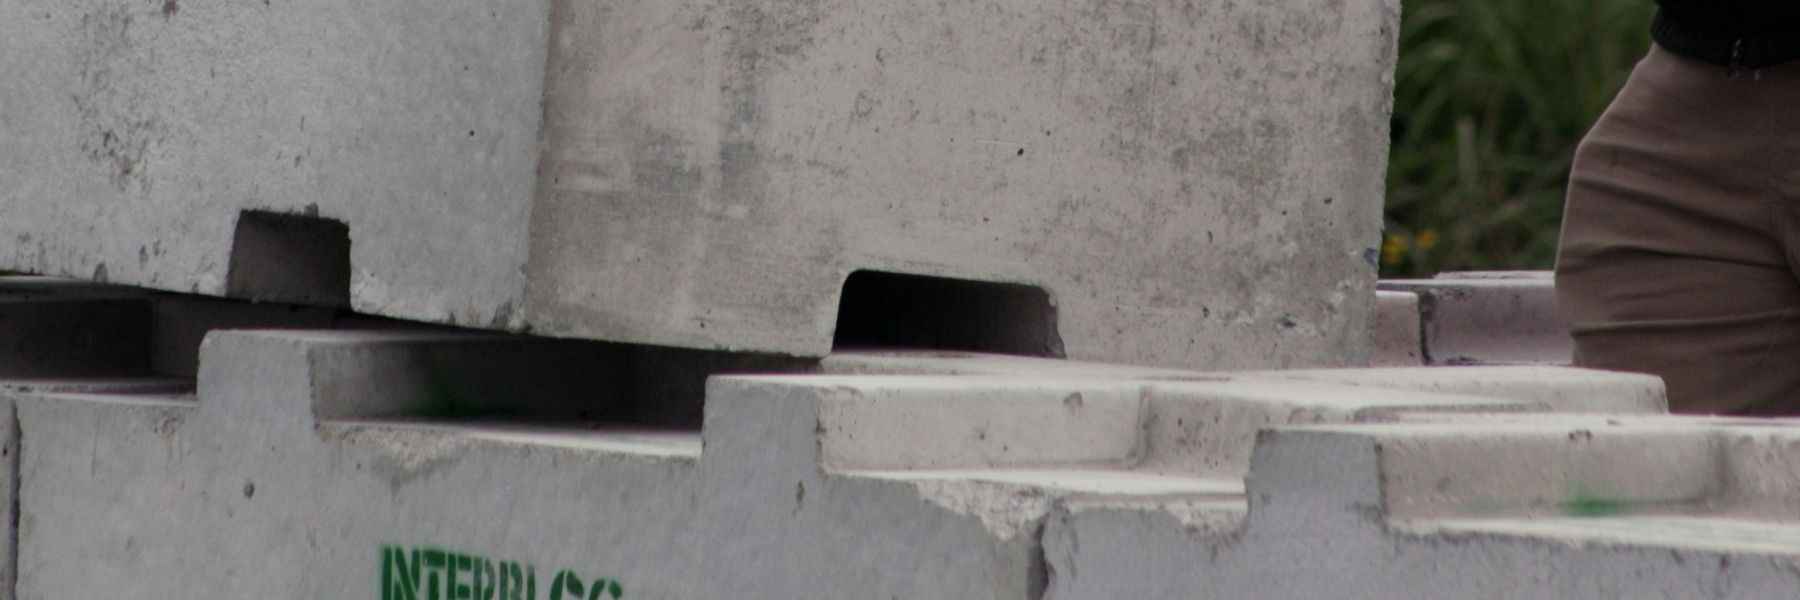 Close up shot of an Interbloc 1200 standard concrete block locking onto another Interbloc block 